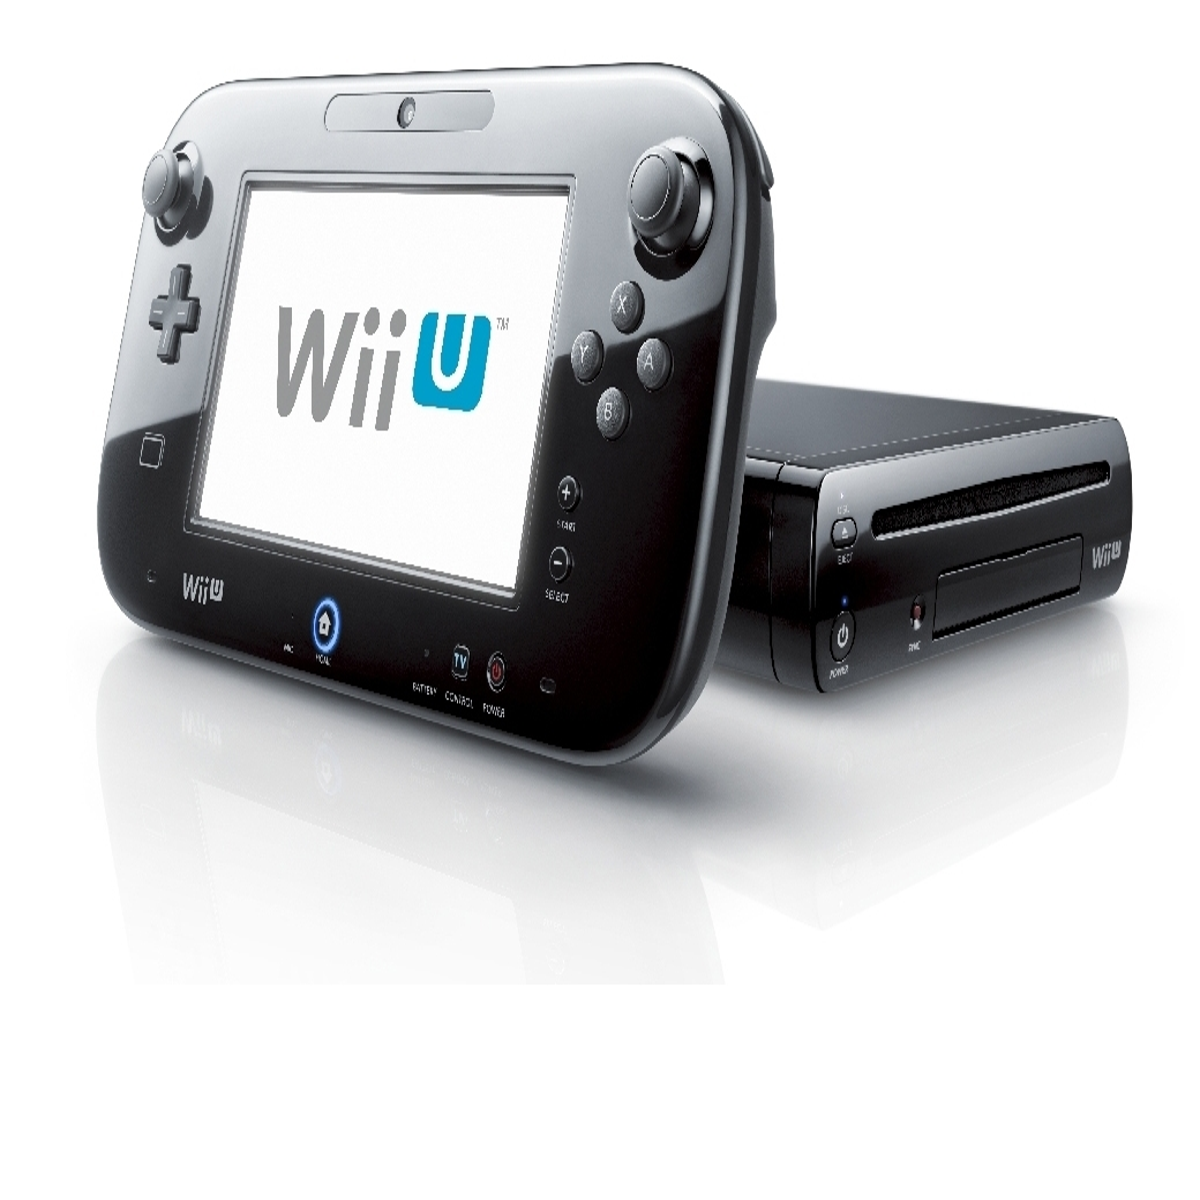 Wii U GamePad Dimensions & Drawings